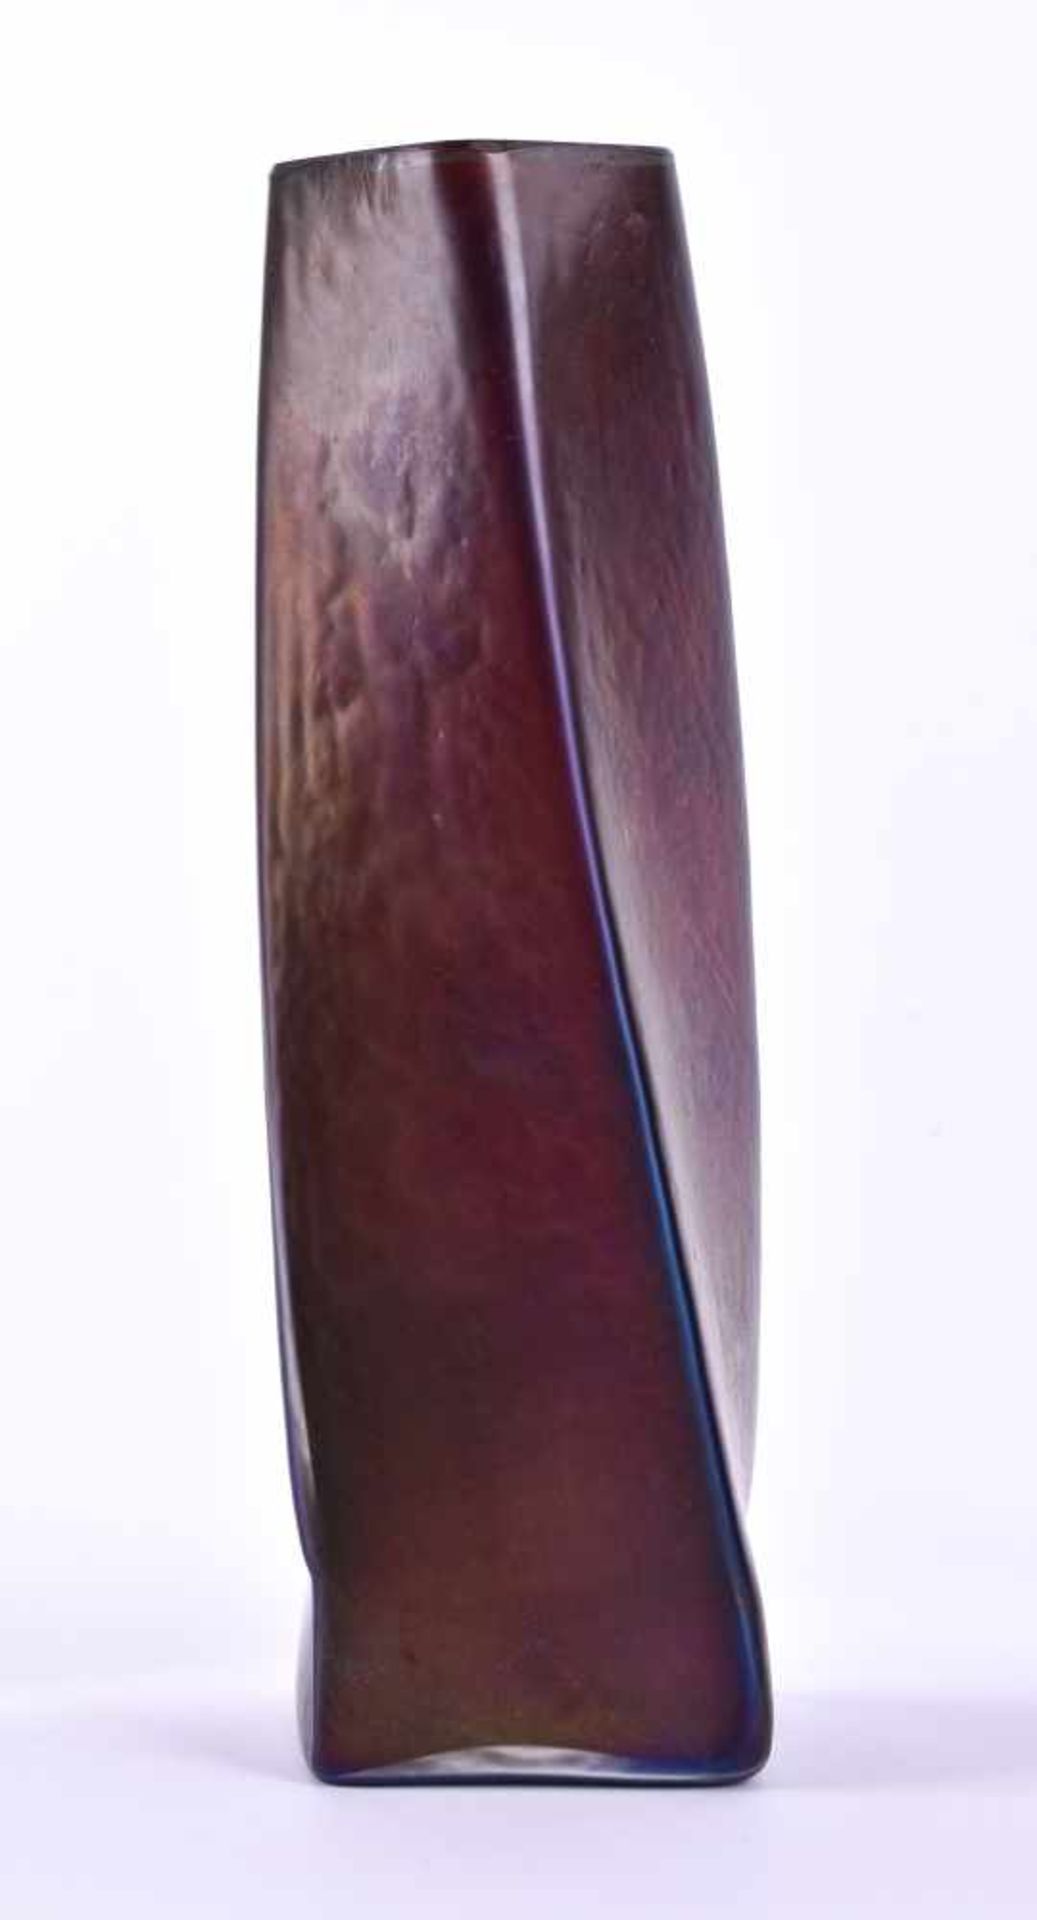 Jugendstil Vaseirisierendes violettes Glas mit aufgesetztem floralen Dekor, vierkant Vase gedreht, - Image 2 of 6